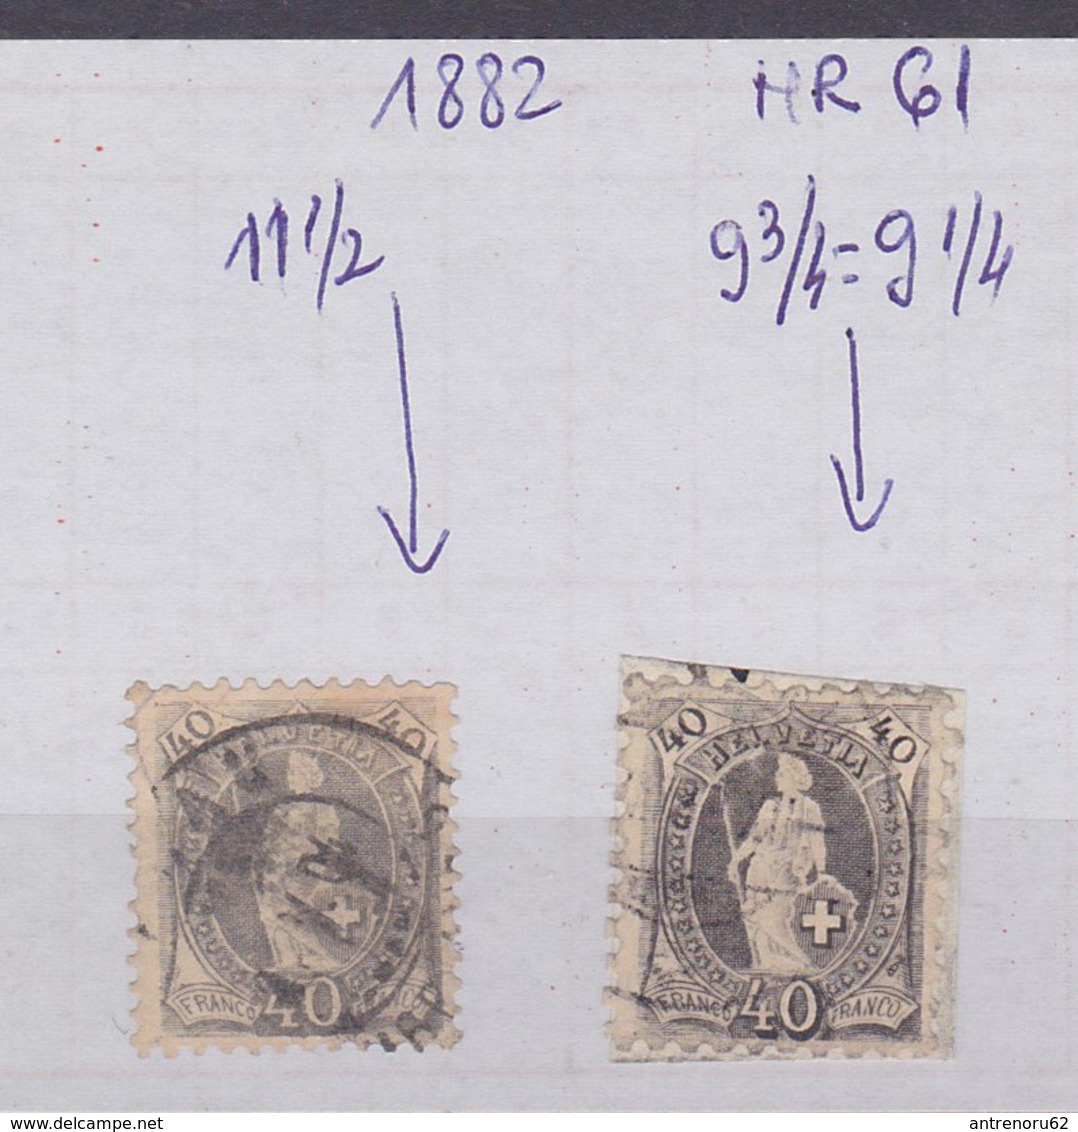 SWITZERLAND-1882-NR-61-GEZ-9.3/4-9.1/6-(COTE-750-EURO)USED-SEE-SCAN - Usati